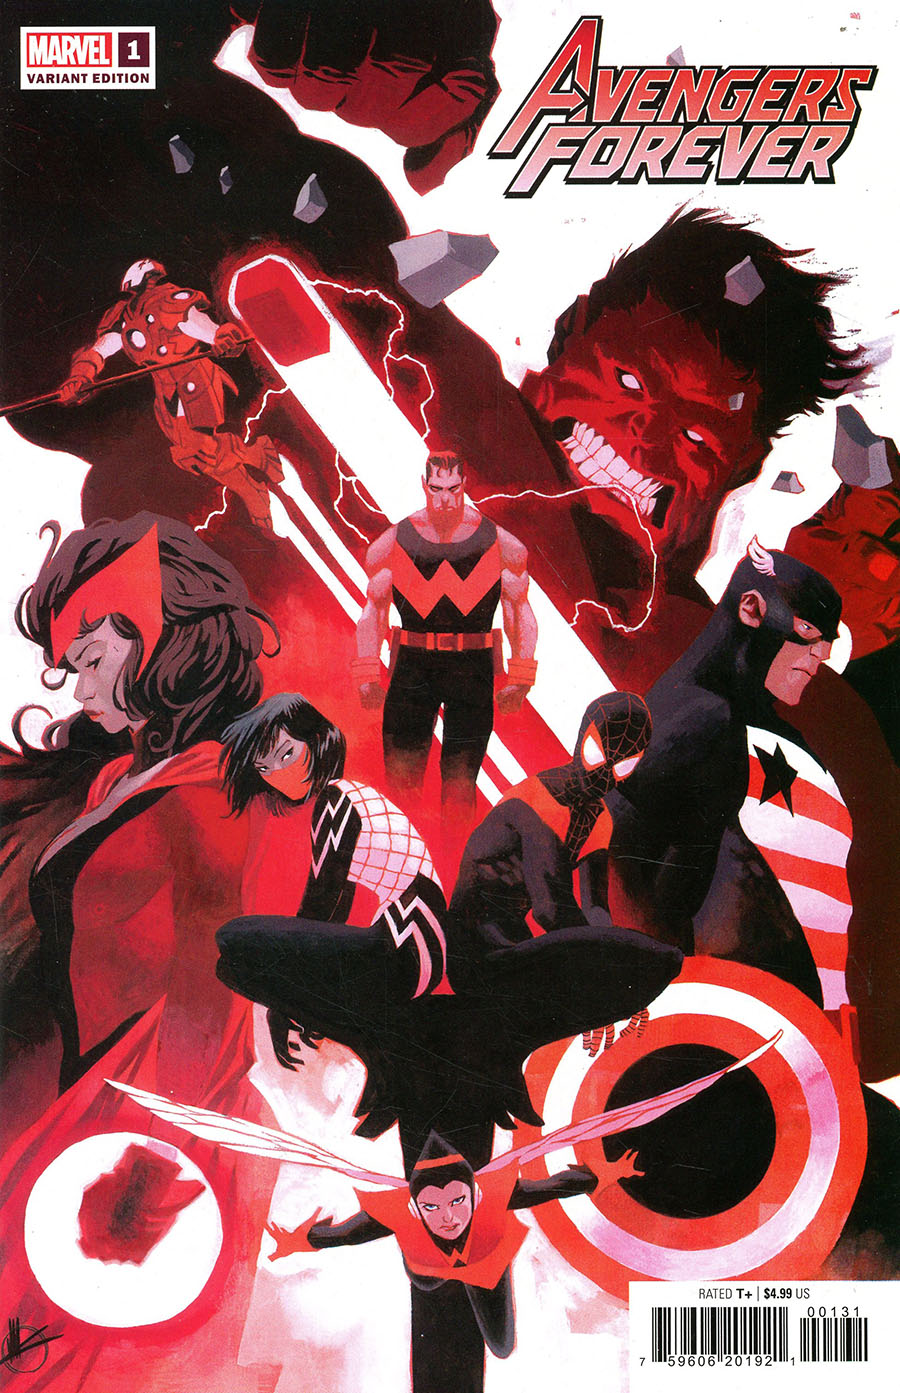 Avengers Forever Vol 2 #1 Cover C Variant Matteo Scalera Cover